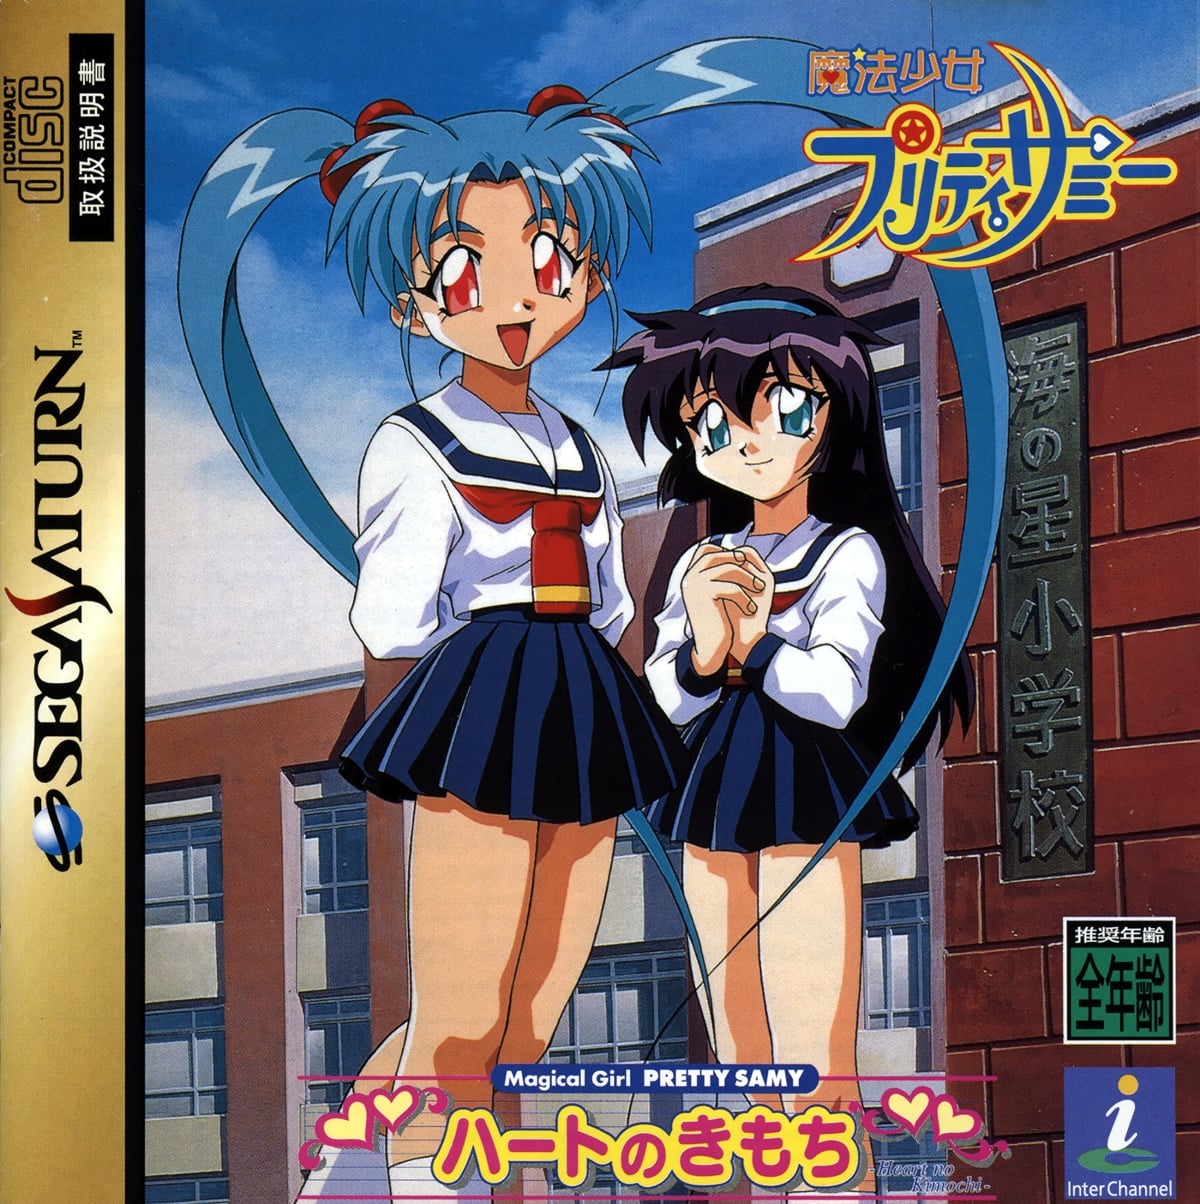 Capa do jogo Mahou Shoujo Pretty Samy: Heart no Kimochi